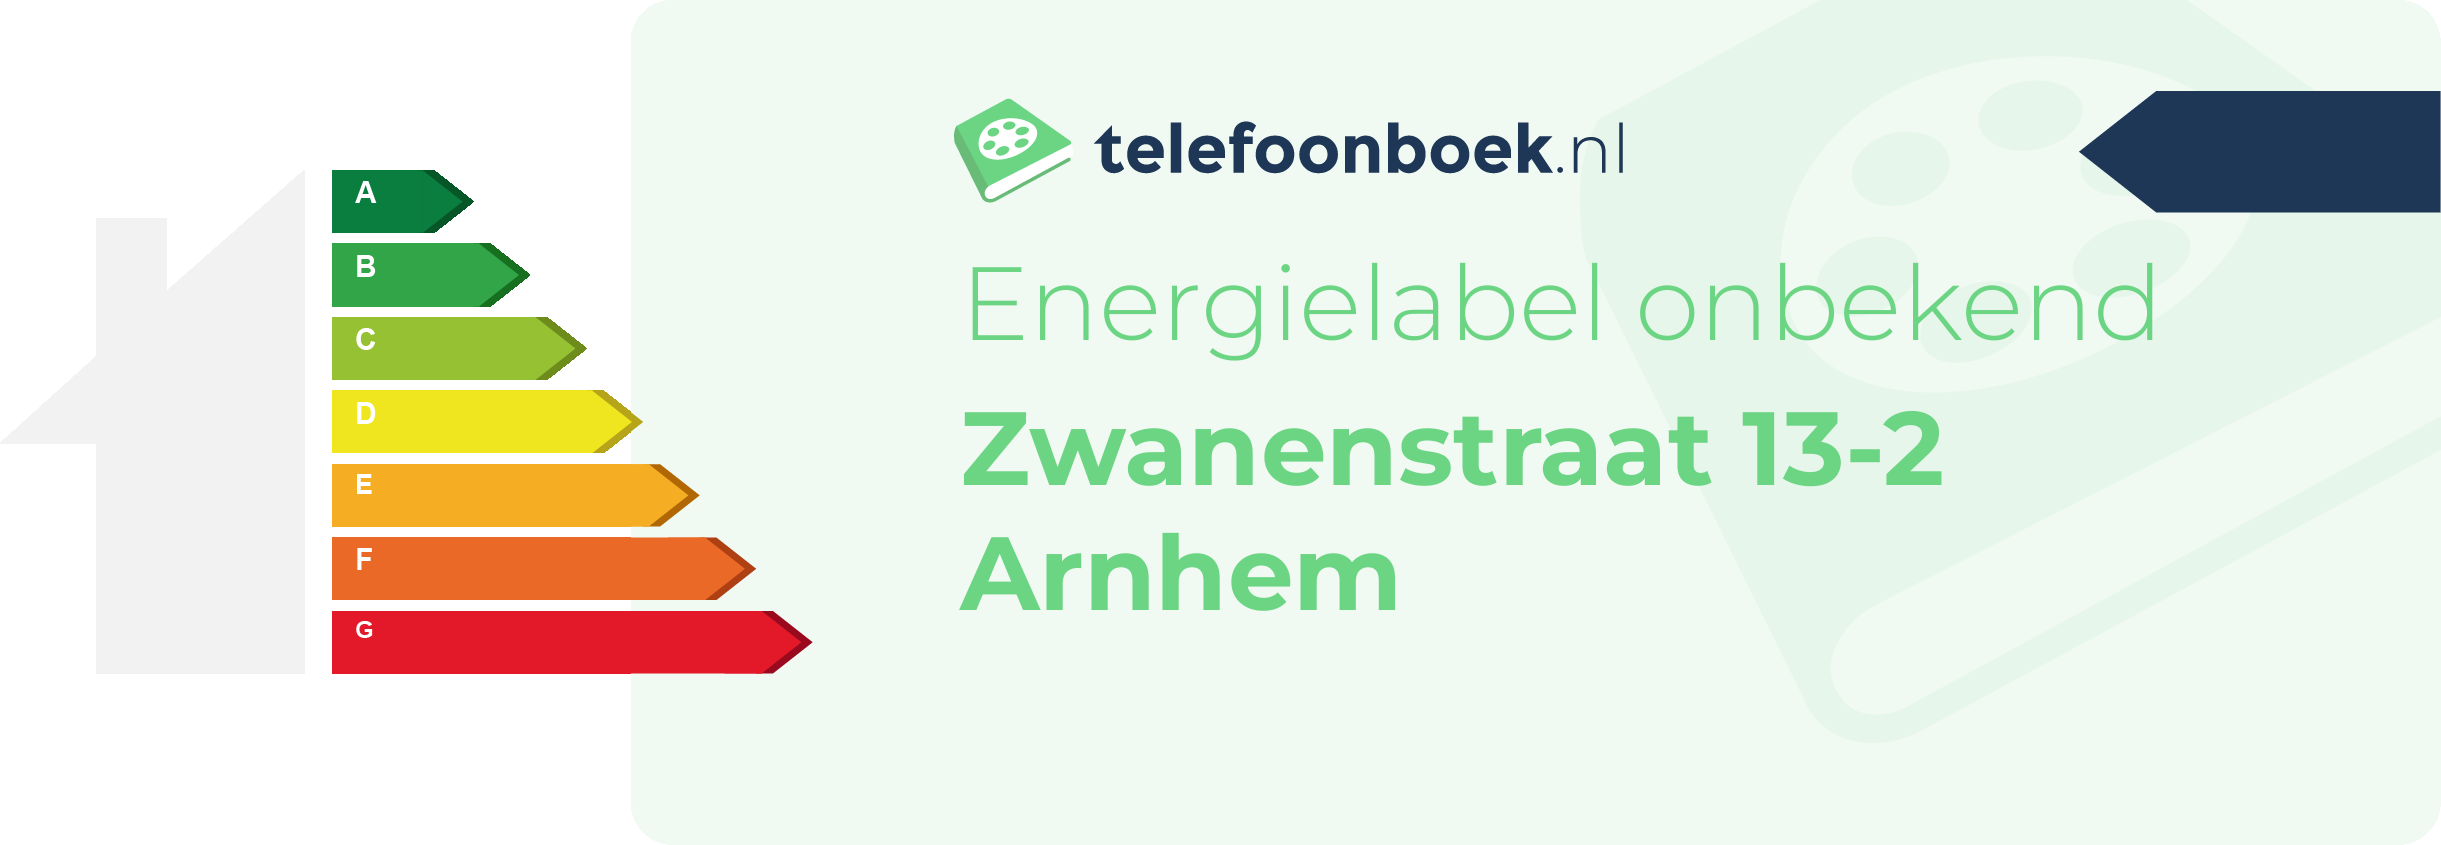 Energielabel Zwanenstraat 13-2 Arnhem